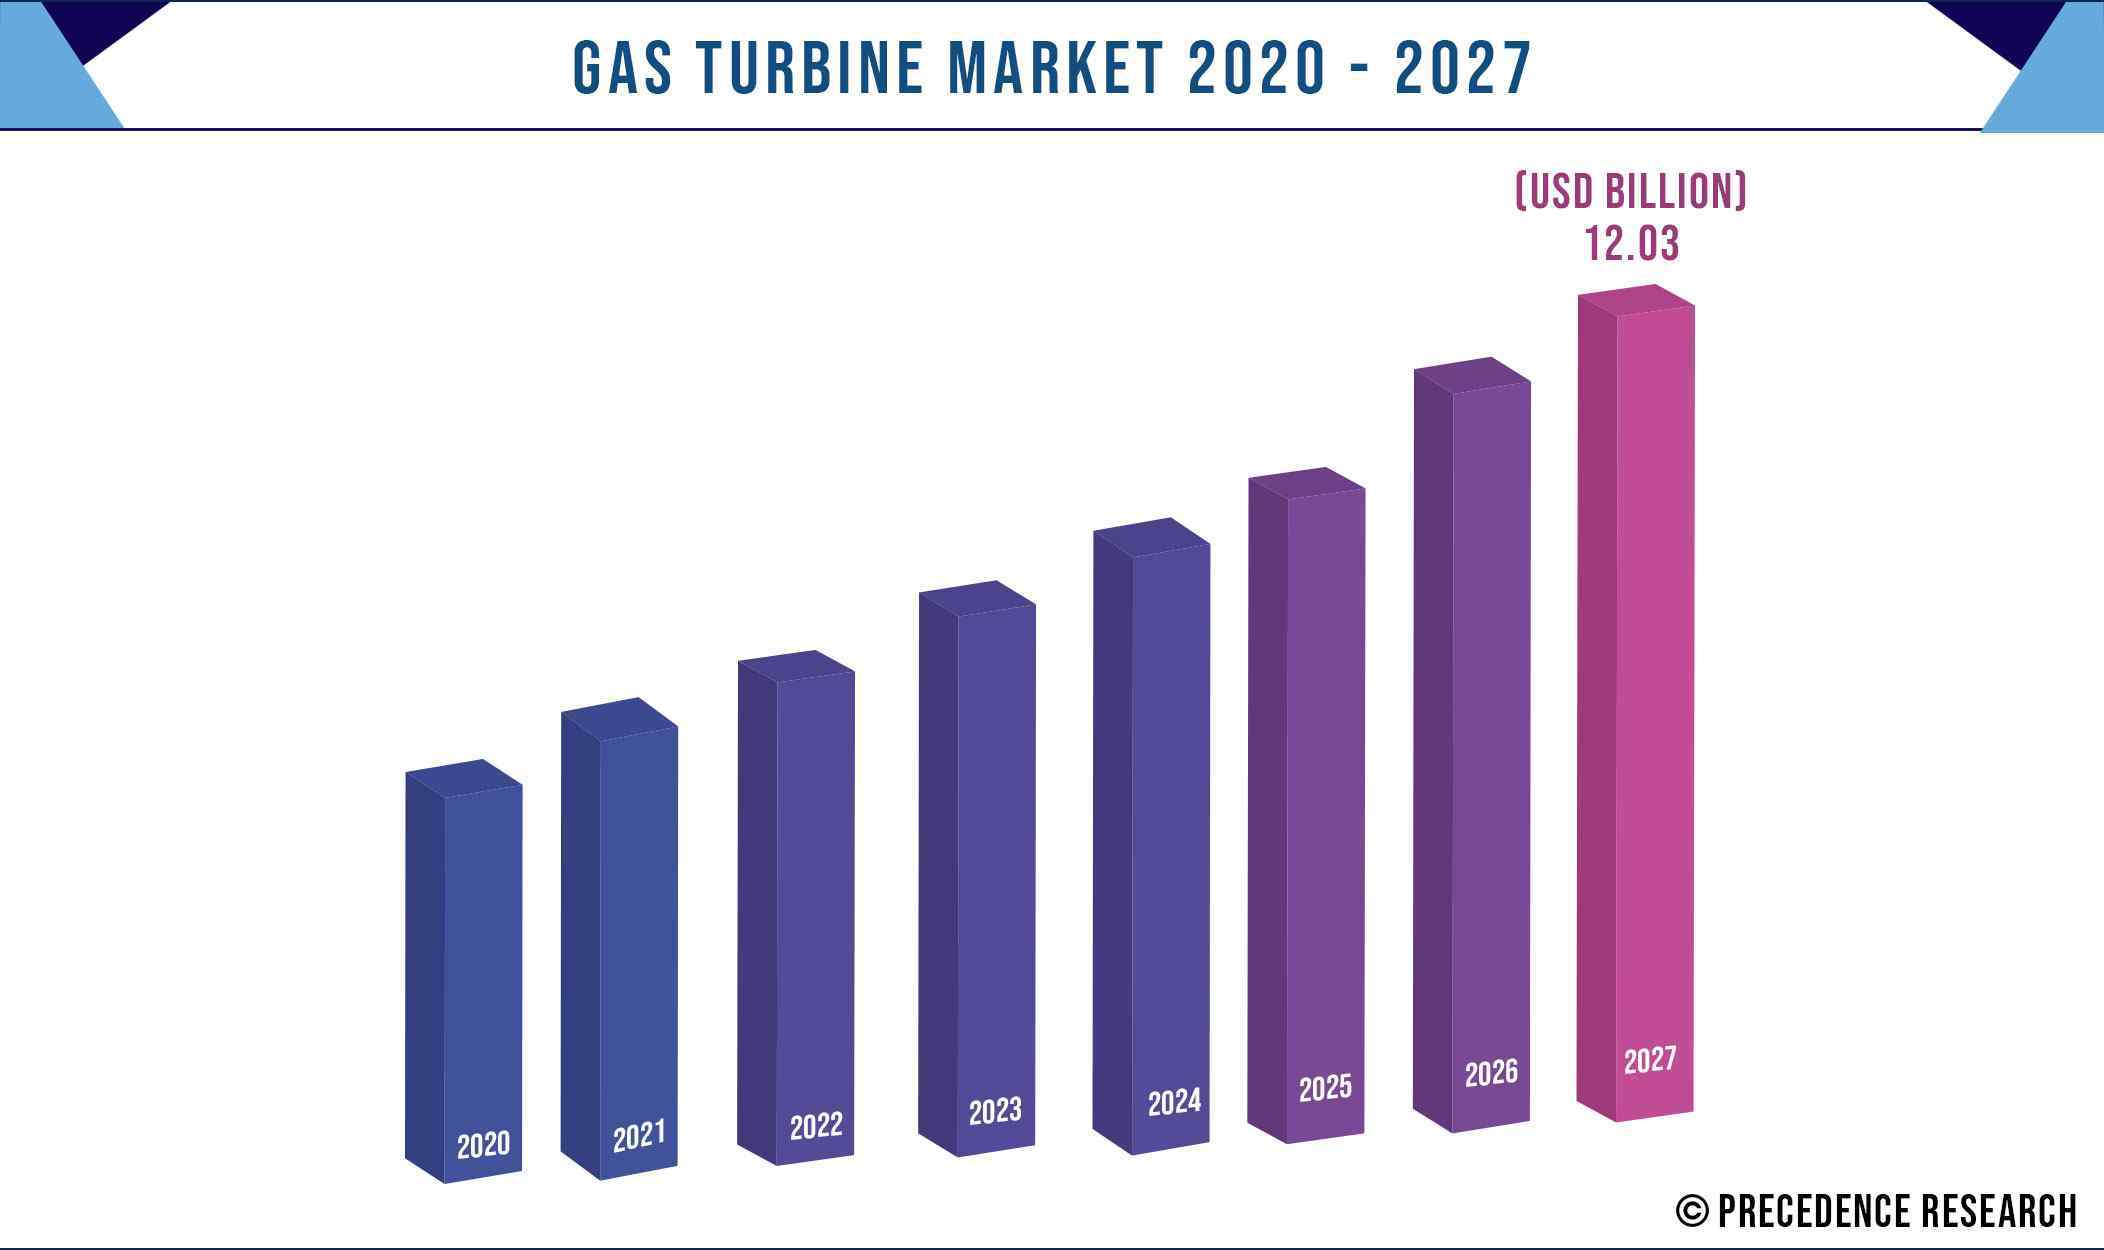 Gas Turbine Market Size 2020-2027